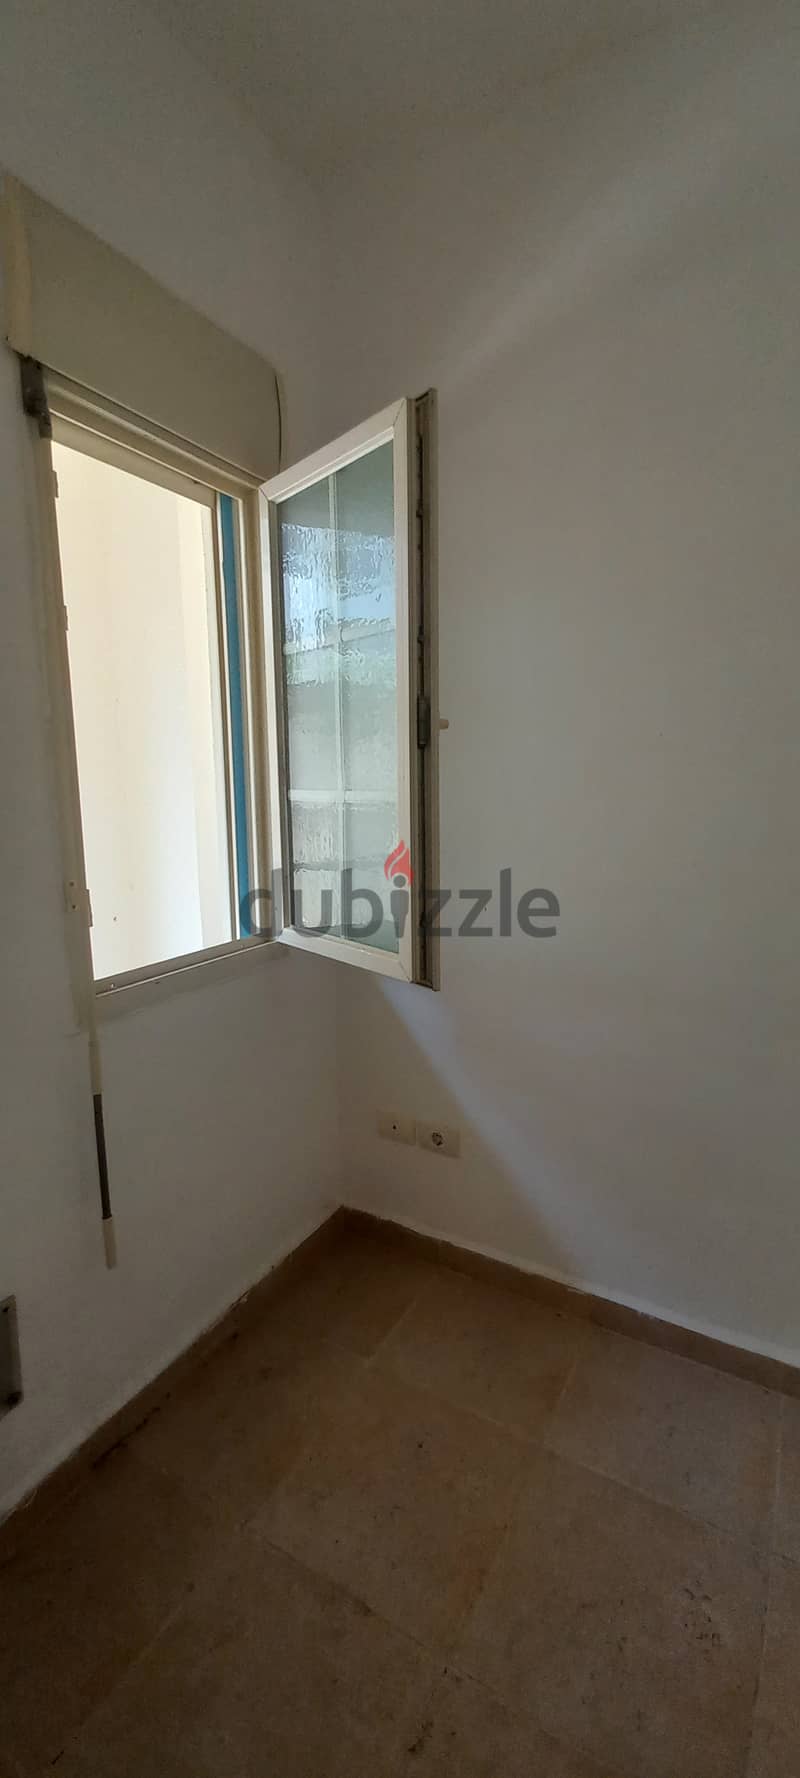 RWK149EM - Apartment for Sale in Zouk Mikael - شقة للبيع في زوق مكايل 11